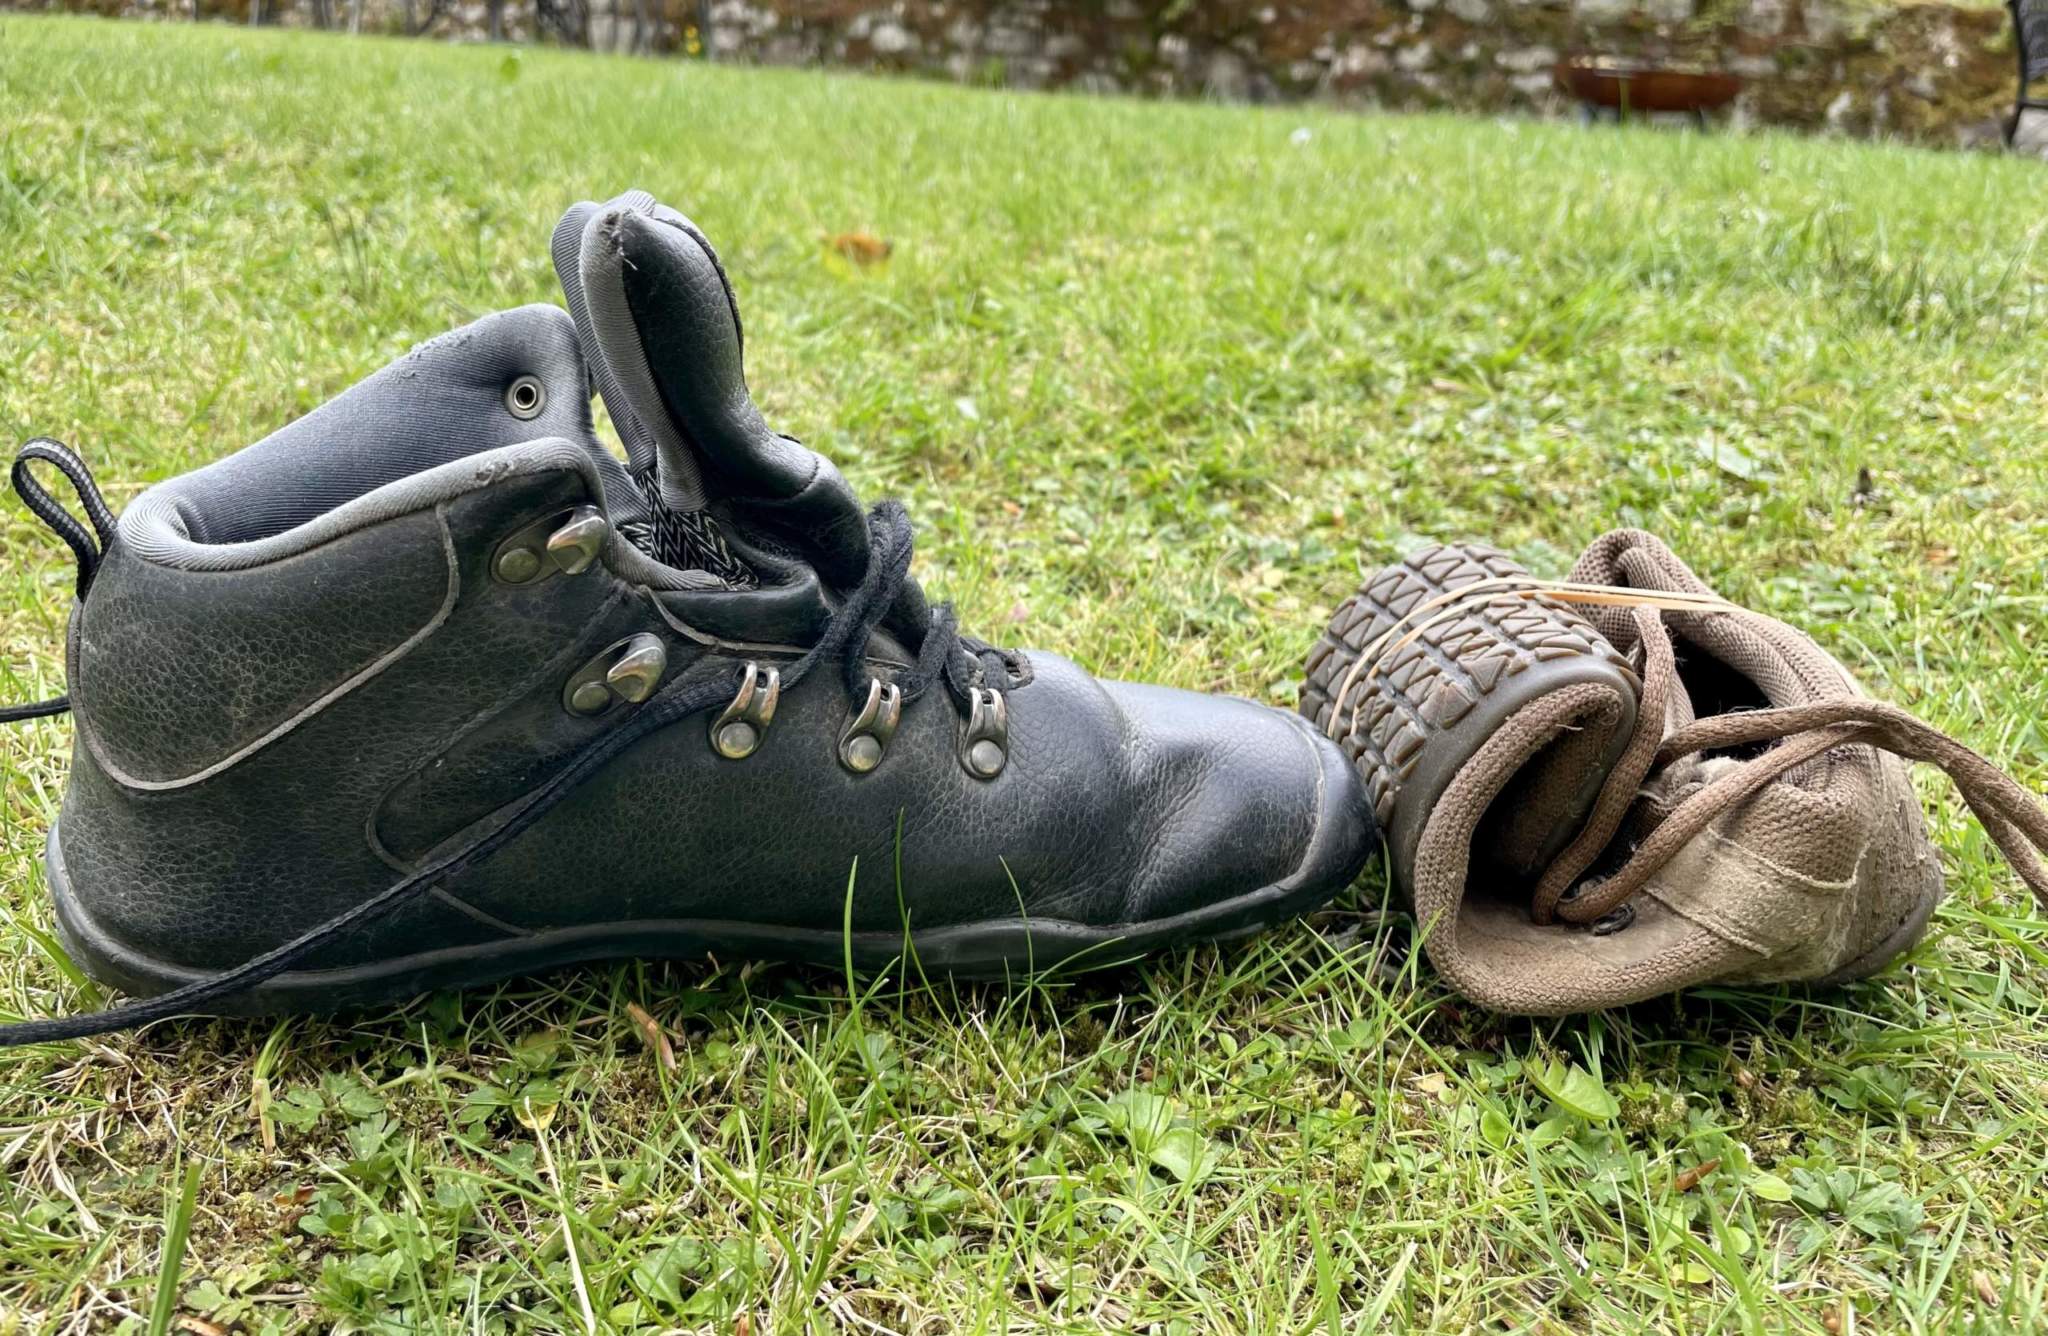 Against the grain – wearing minimalist footwear in the Scottish Hills